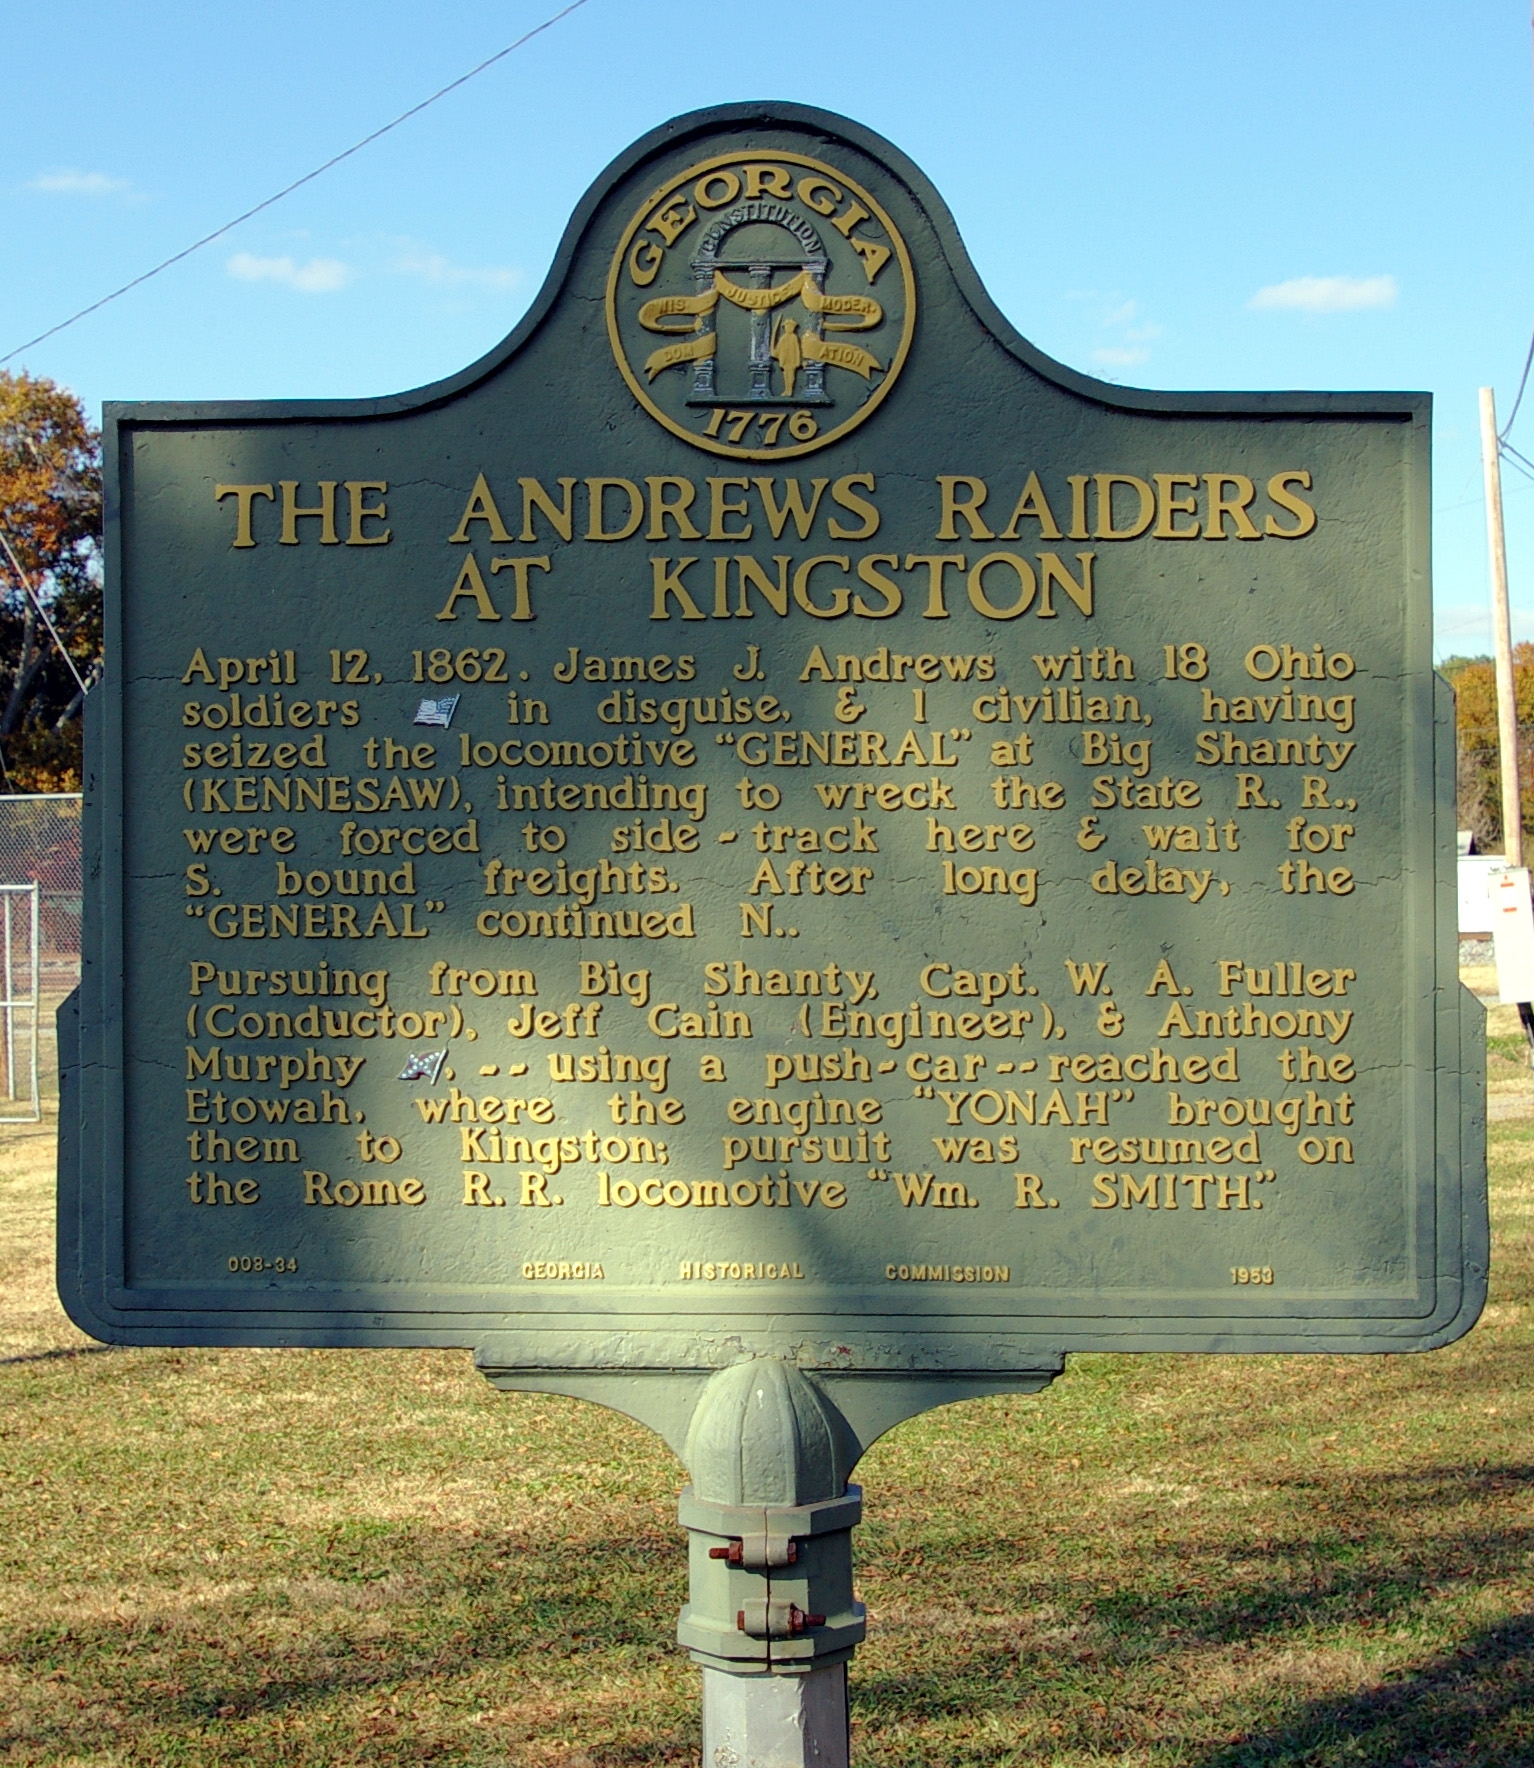 The Andrews Raiders at Kingston Marker